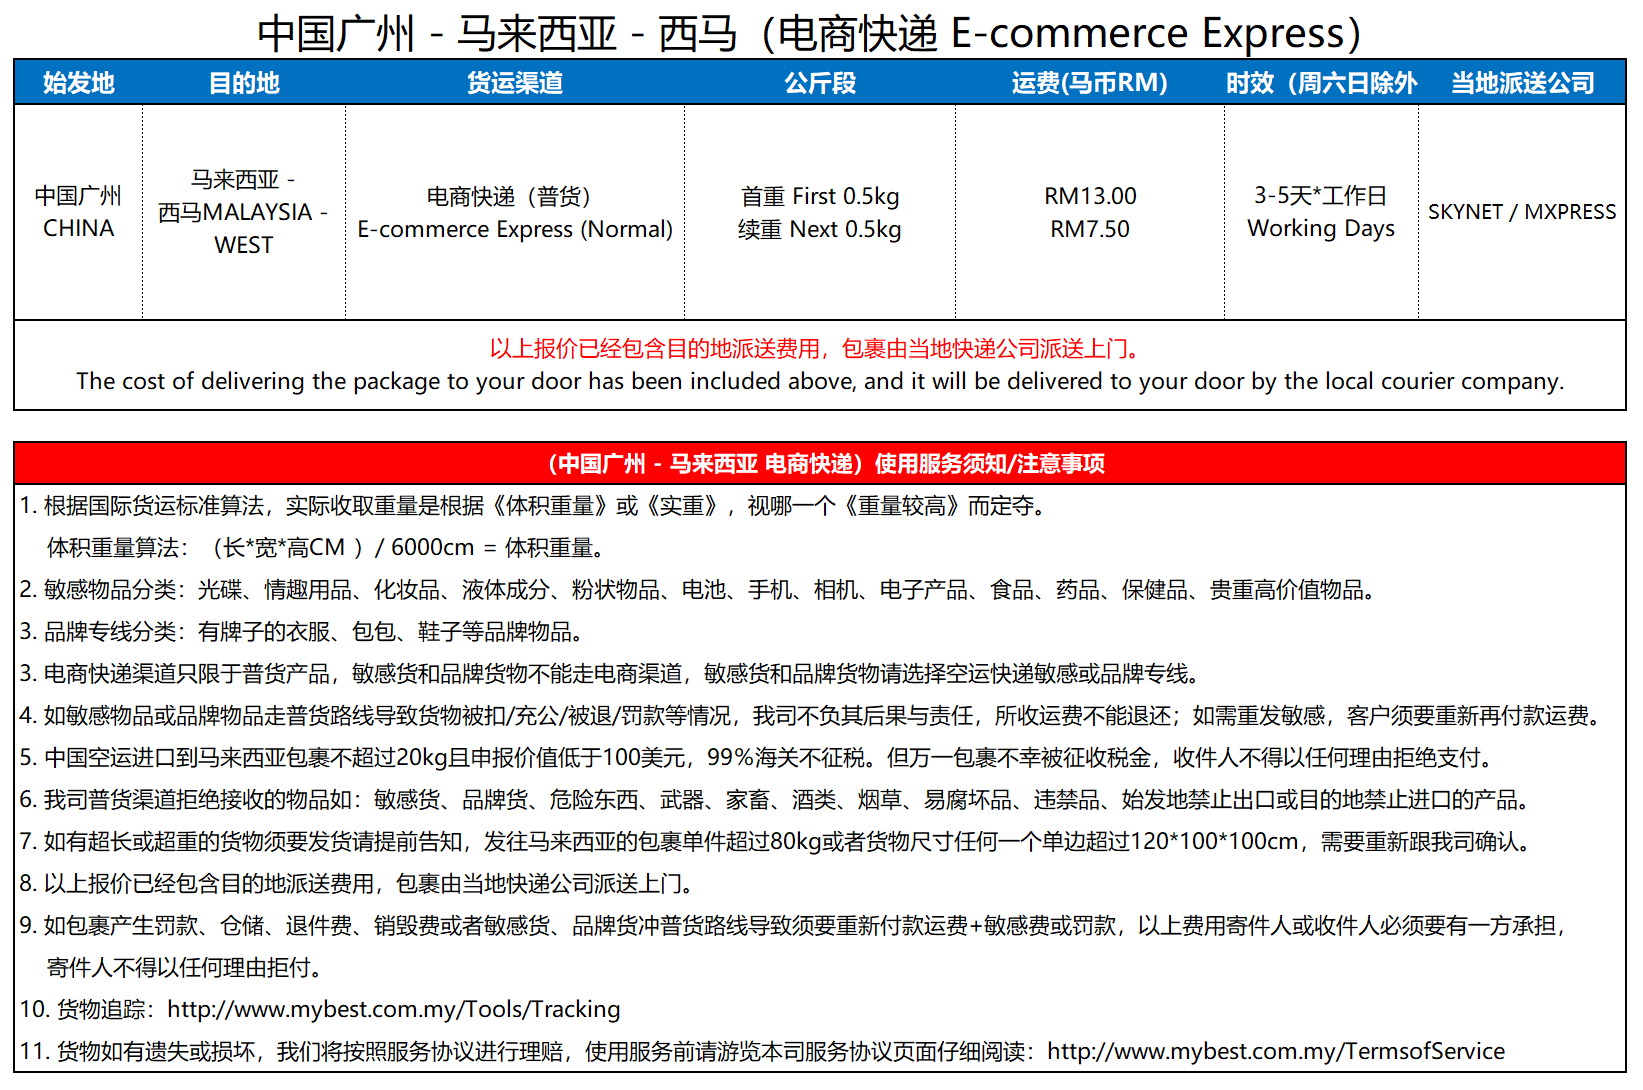 电商快递 E-commerce Express